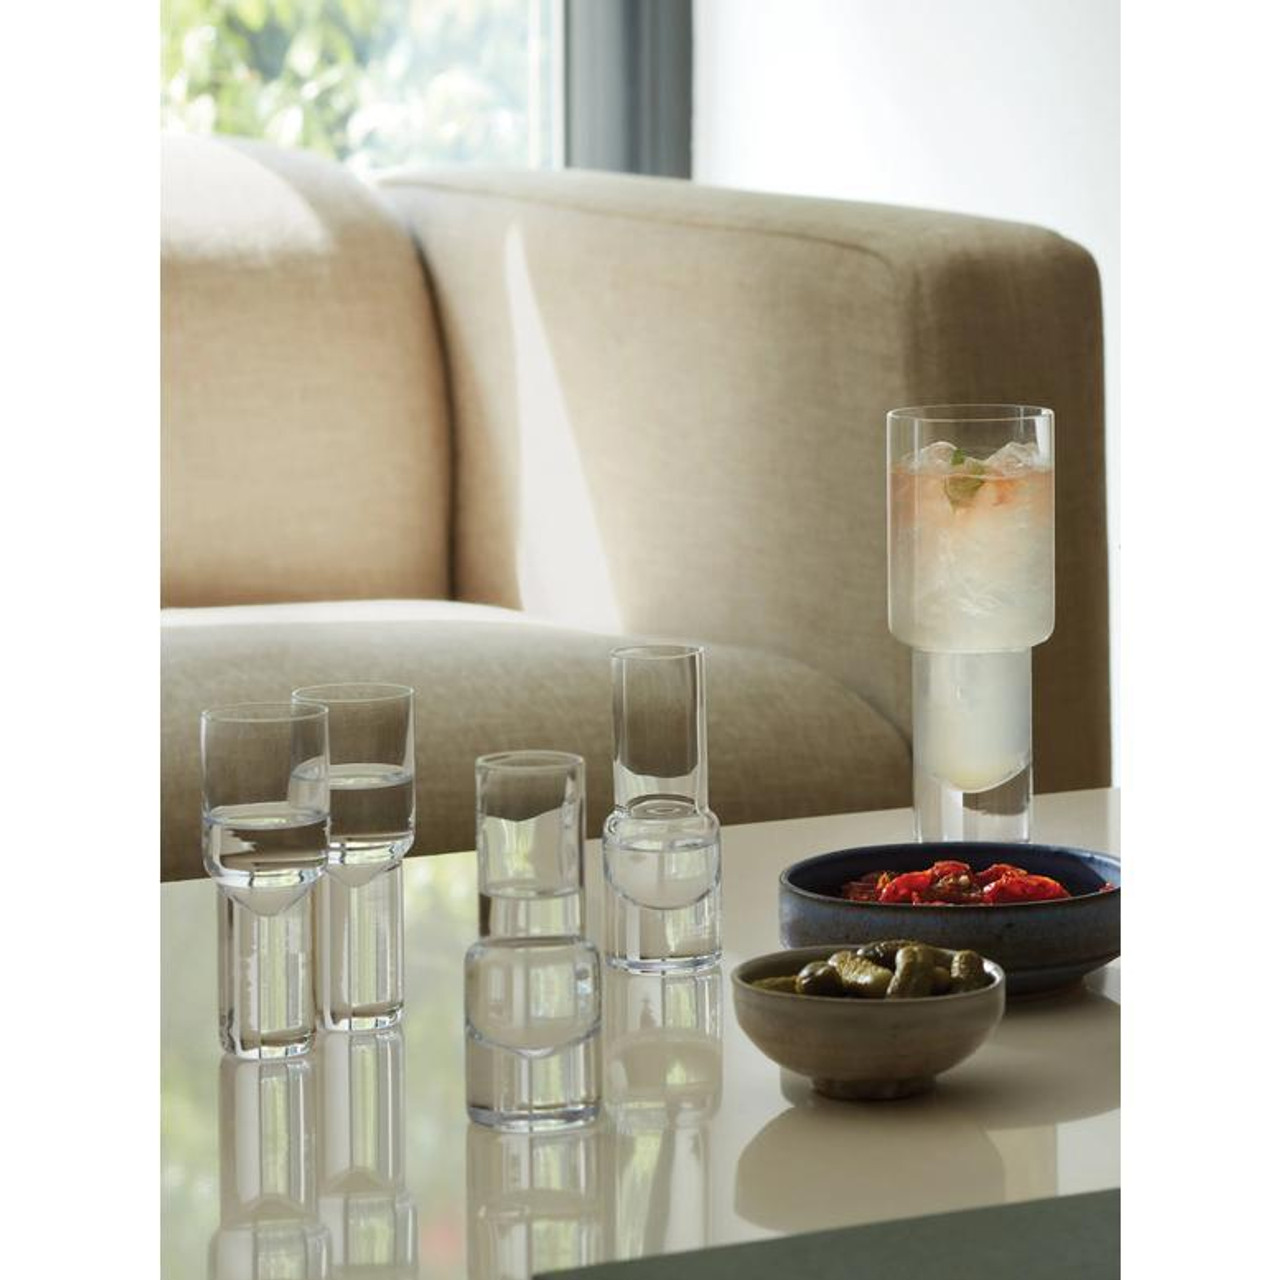 Vodka Mixer Glasses - 13.5oz, Set of 2 - Counterpoint